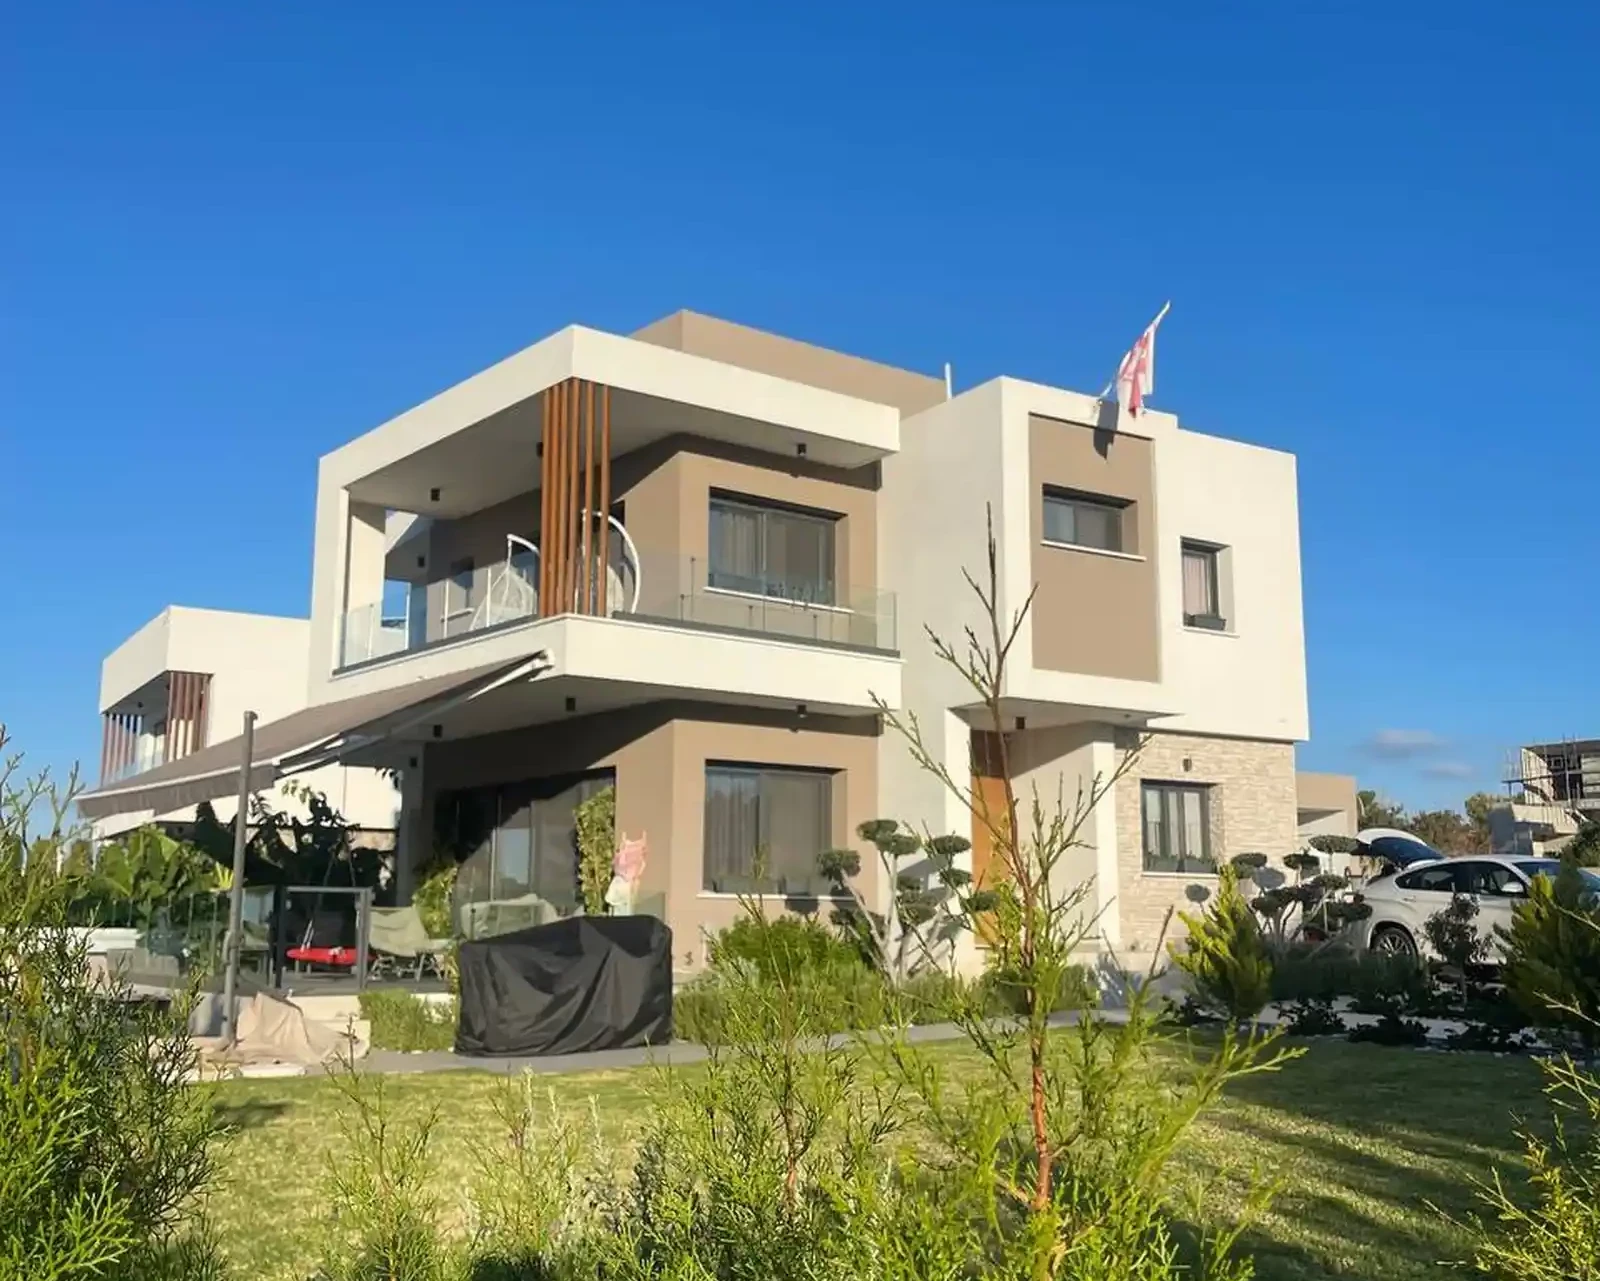 5-bedroom villa fоr sаle €1.000.000, image 1